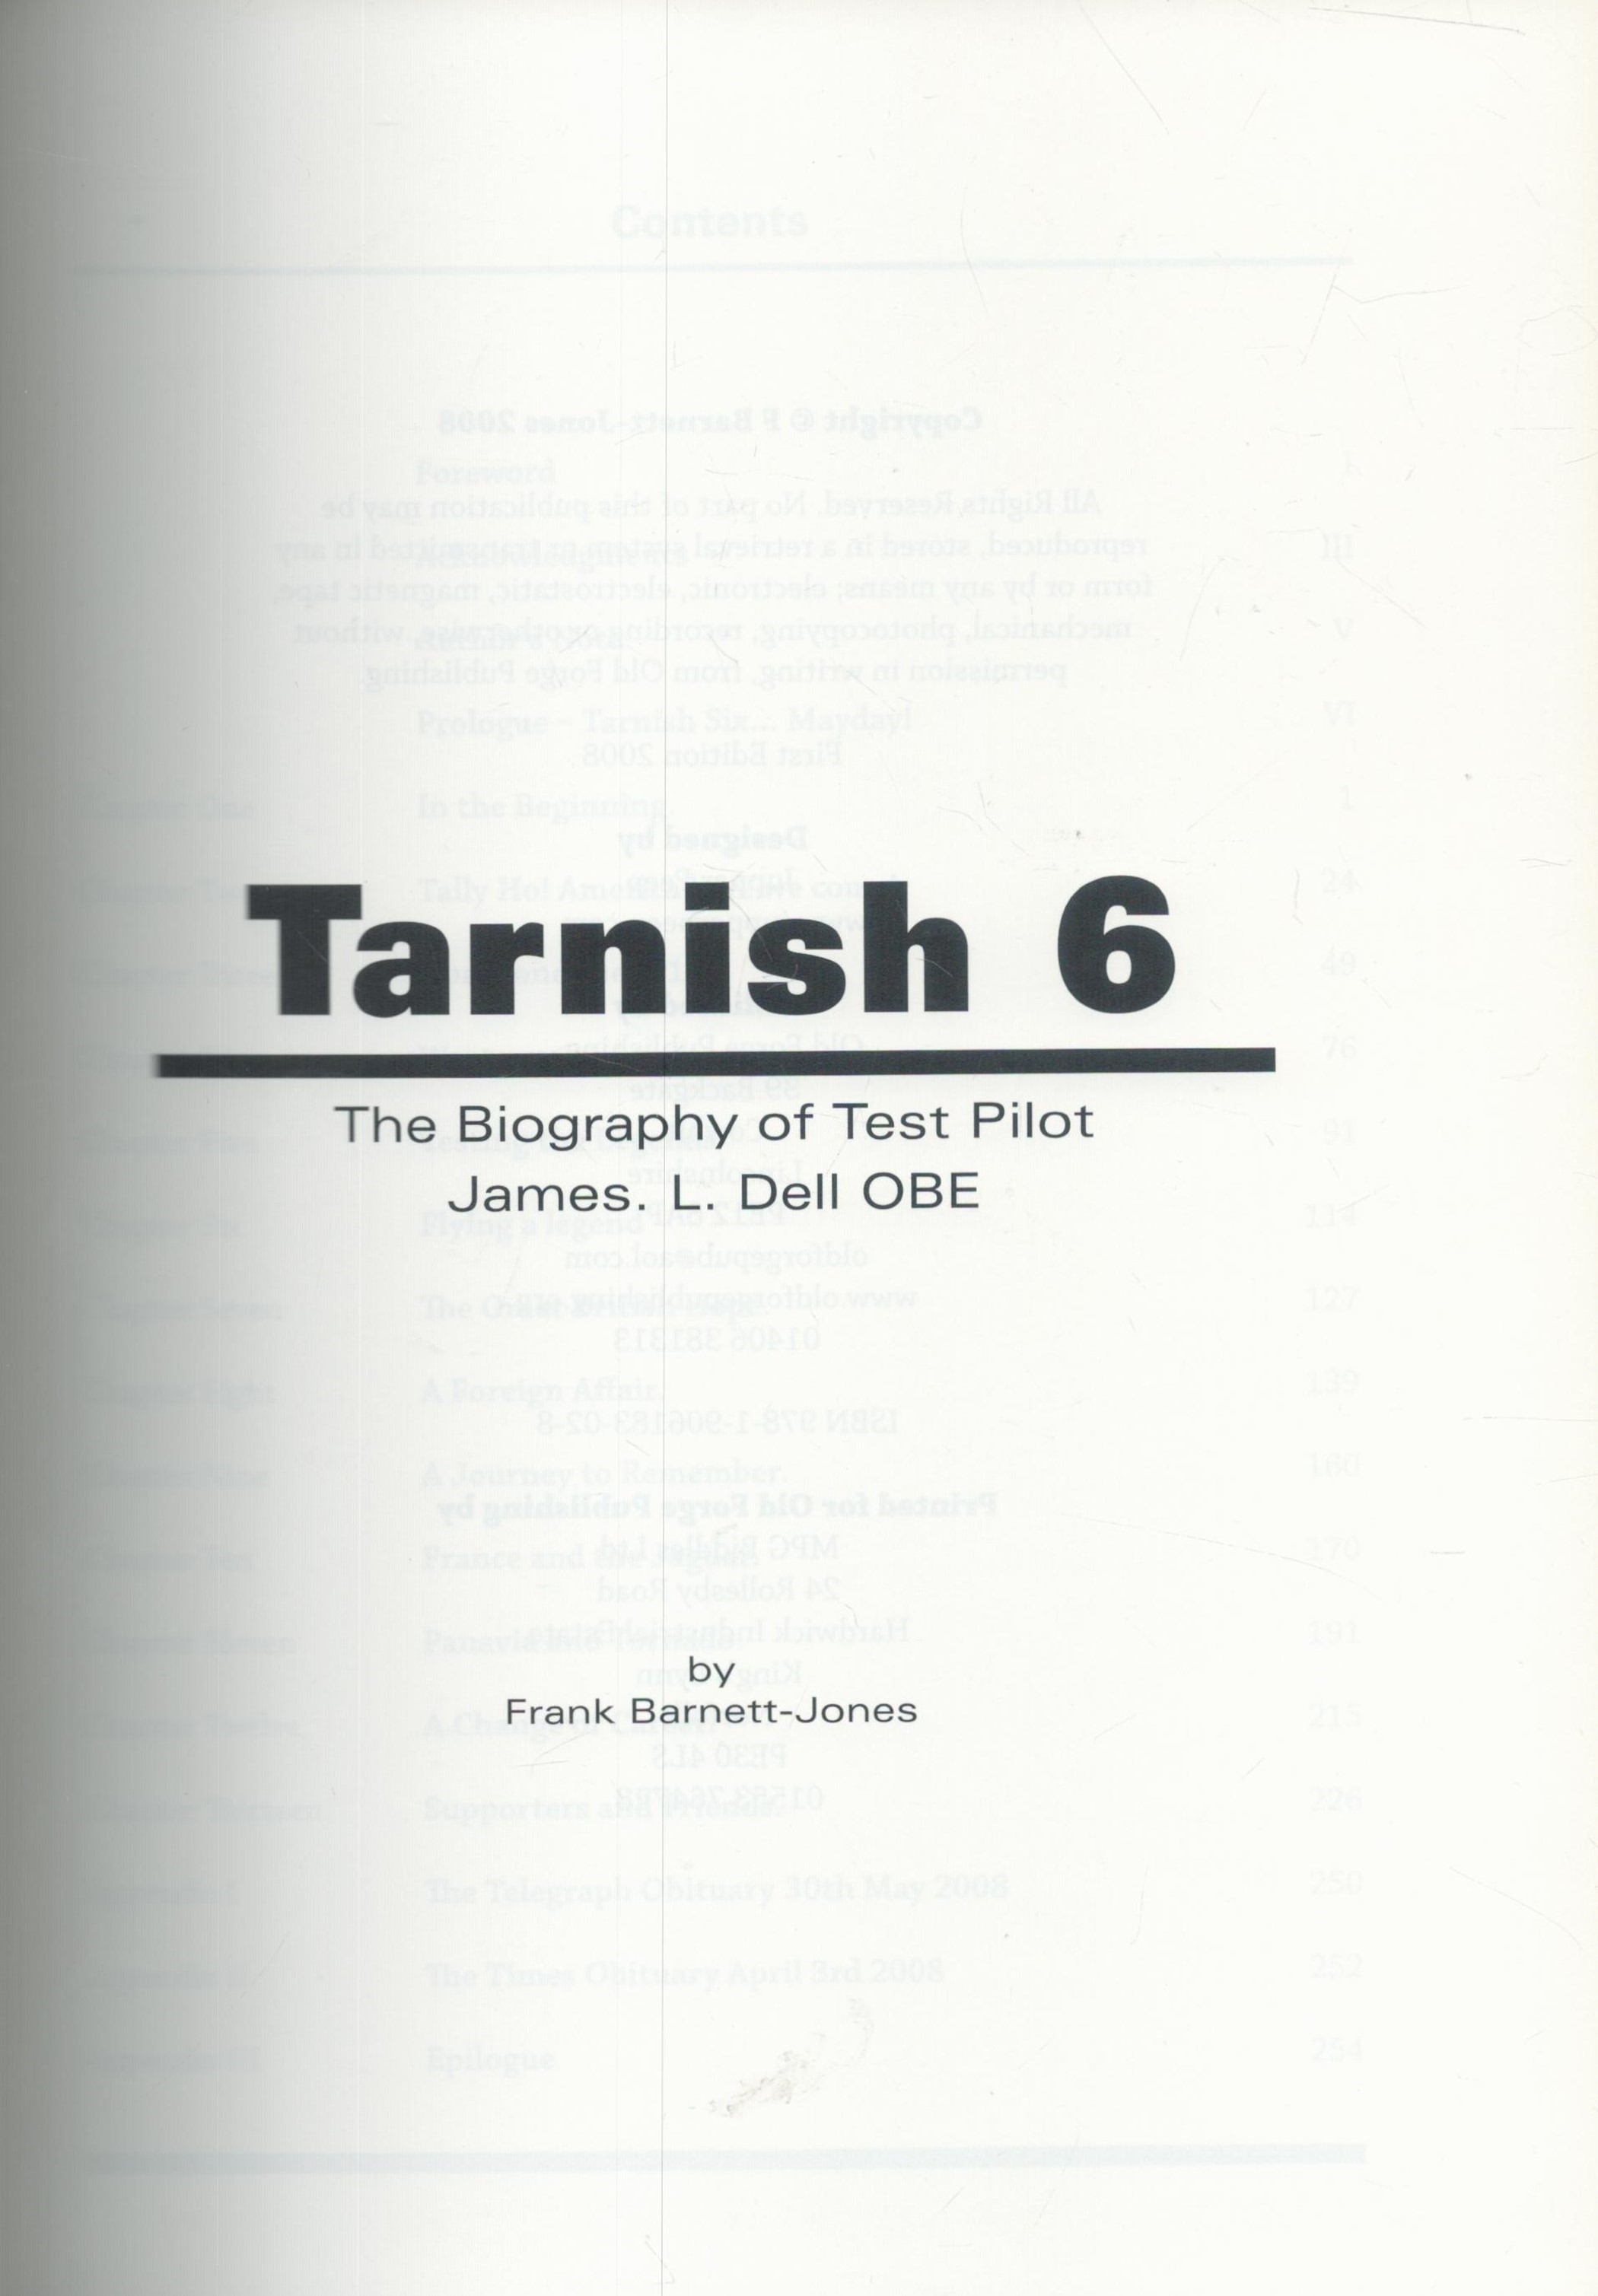 Tarnish 6 - The Biography of Test Pilot Jimmy Dell by Frank Barnett-Jones 2008 Hardback Book First - Image 5 of 9